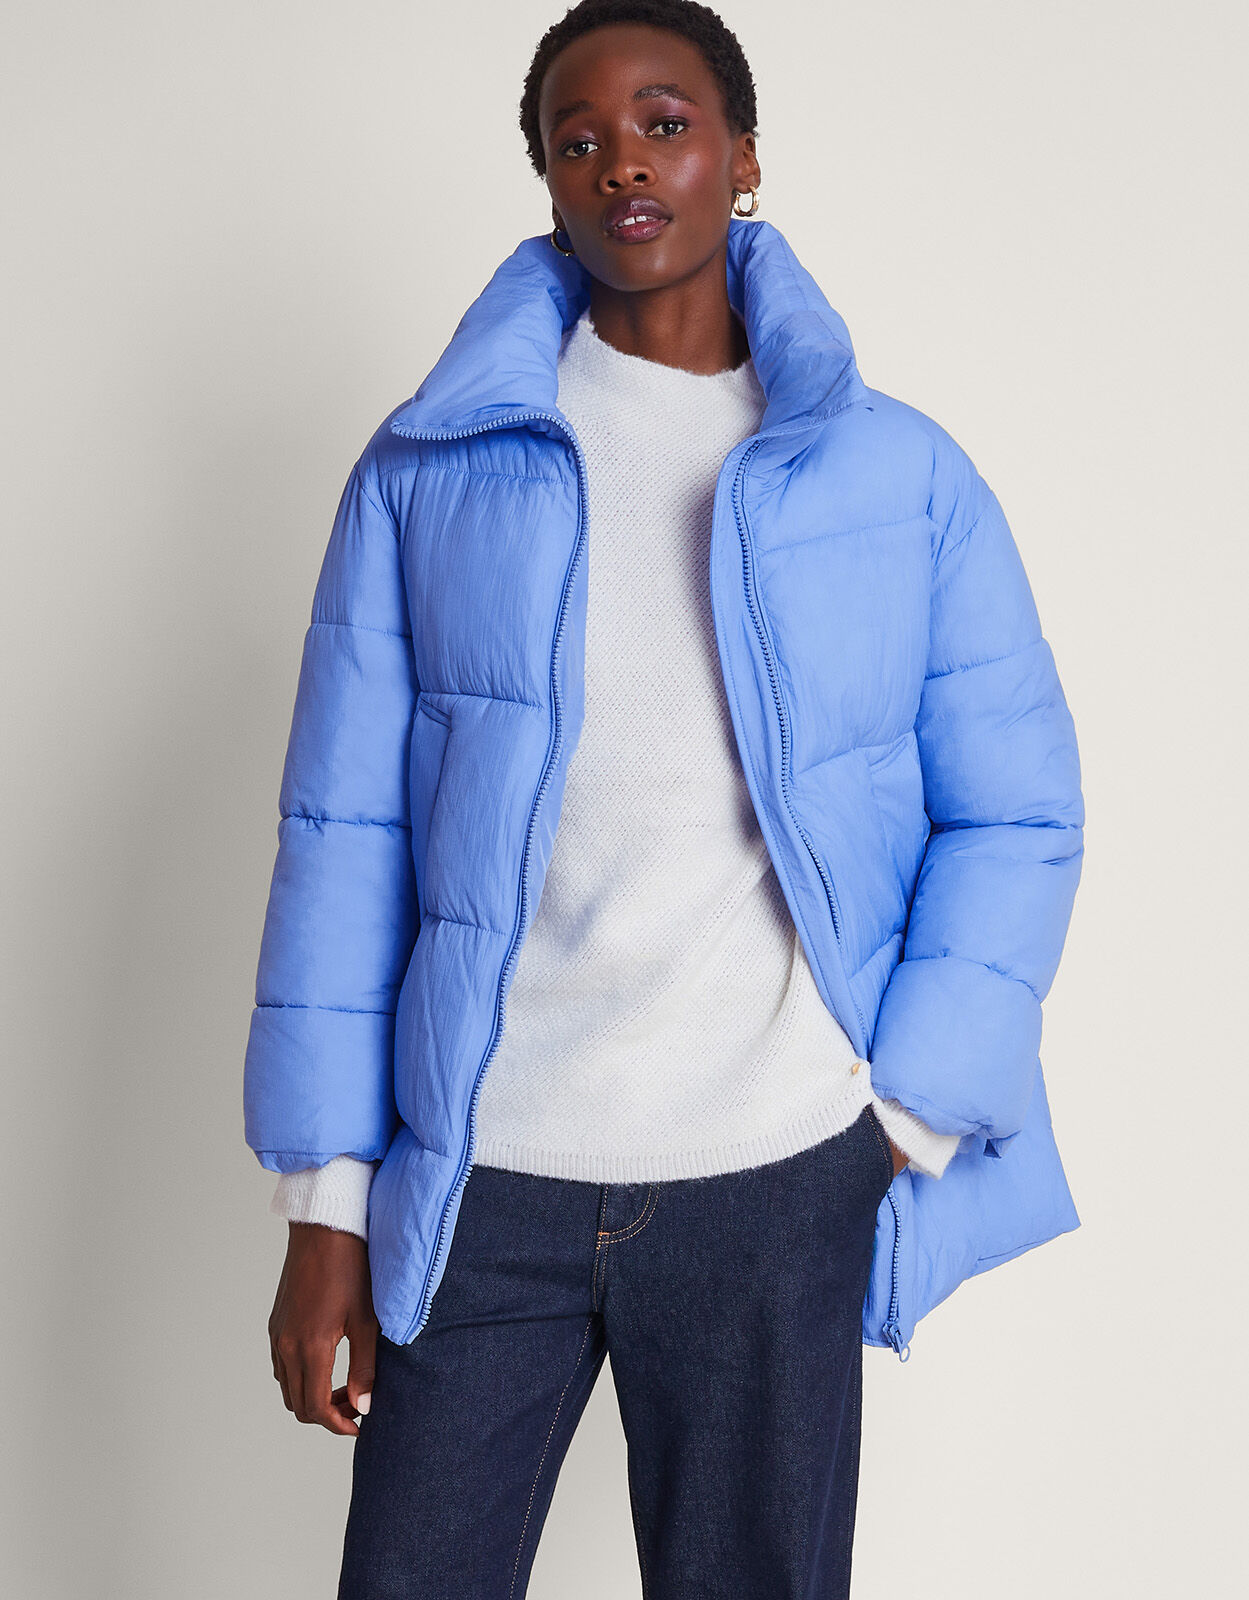 HOOUDO Winter Jackets for Women UK Sale Clearance Teddy Parka Coat Fleece  Lined Zip Up Jacket Coats Faux Fur Hood Windproof Overcoat with Pockets  Thick Vintage Outwear Casual Hoodies Plus Size :